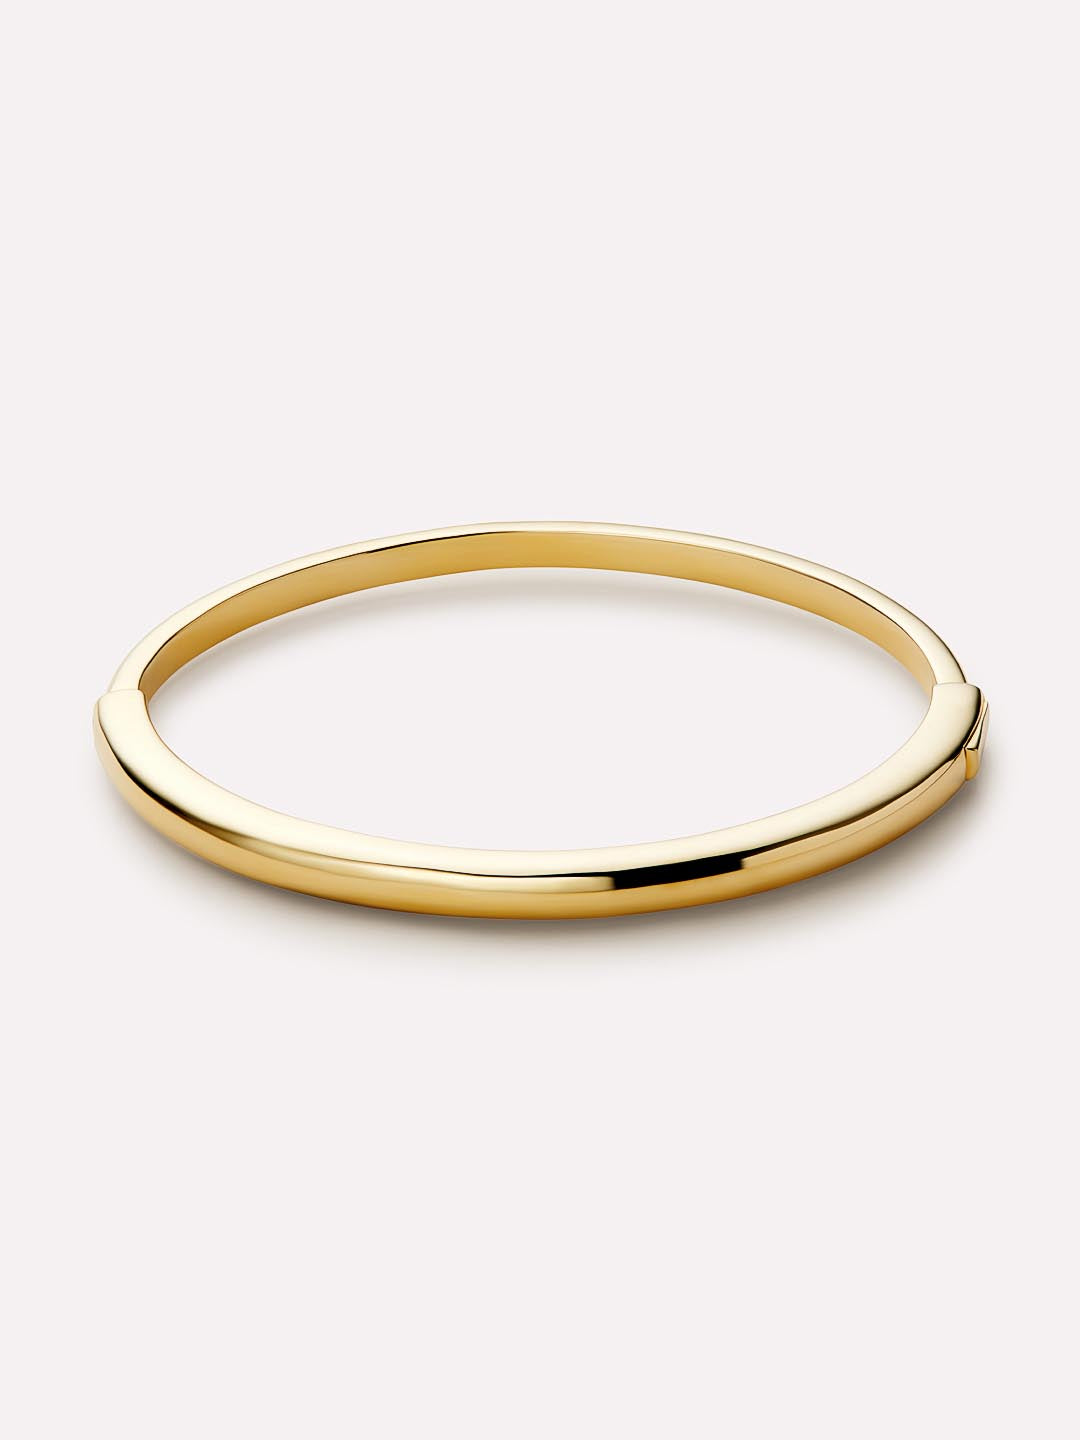 Buy 22k Gold Bangle Bracelet , Indian Gold Bangle Jewelry, Wedding Bridal  Jewelry, All Sizes K1837 Online in India - Etsy